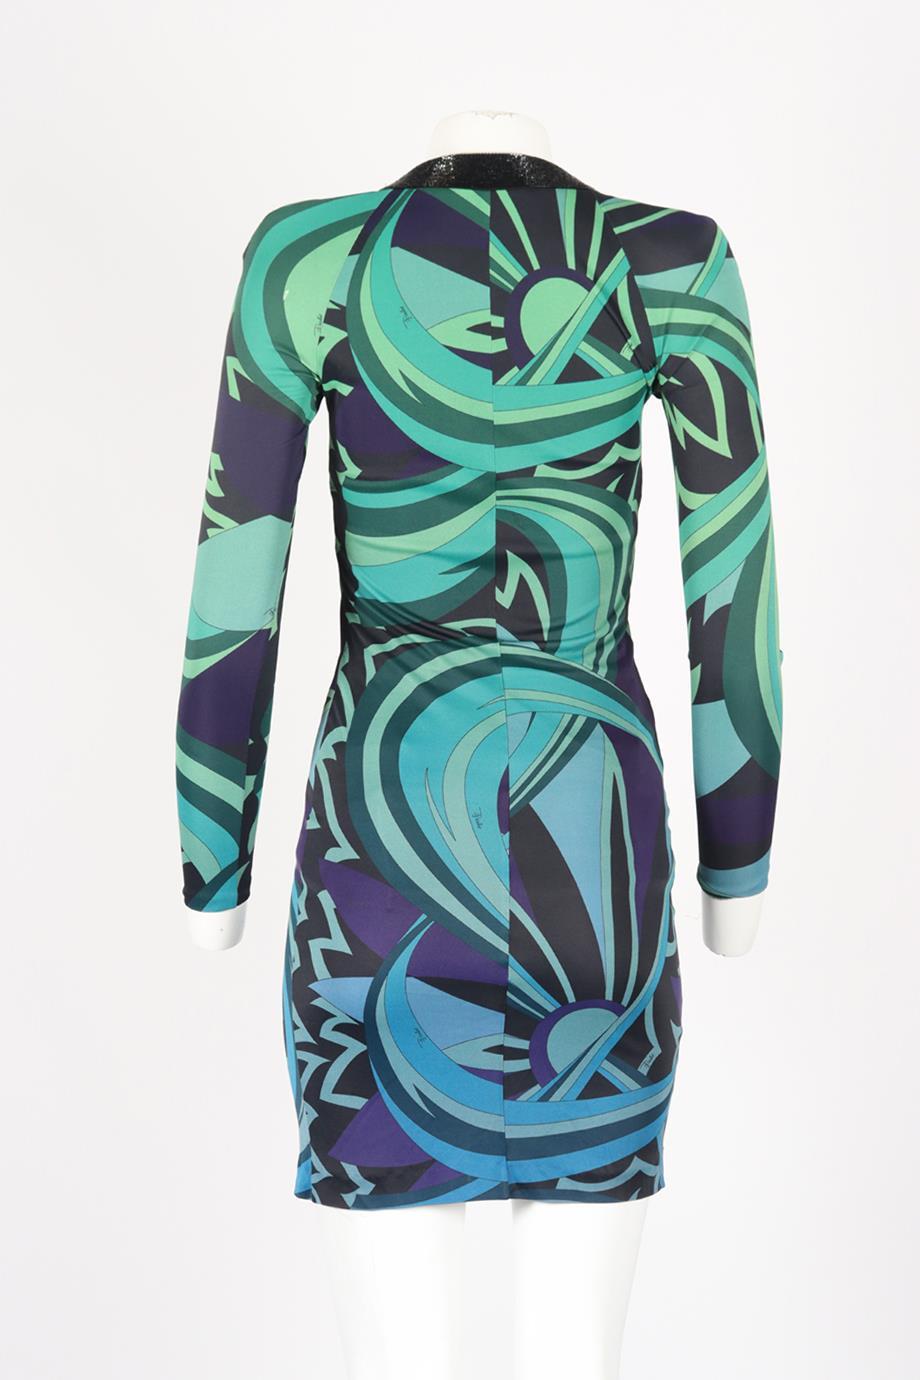 Women's Emilio Pucci Embellished Printed Stretch Jersey Dress It 38 Uk 6